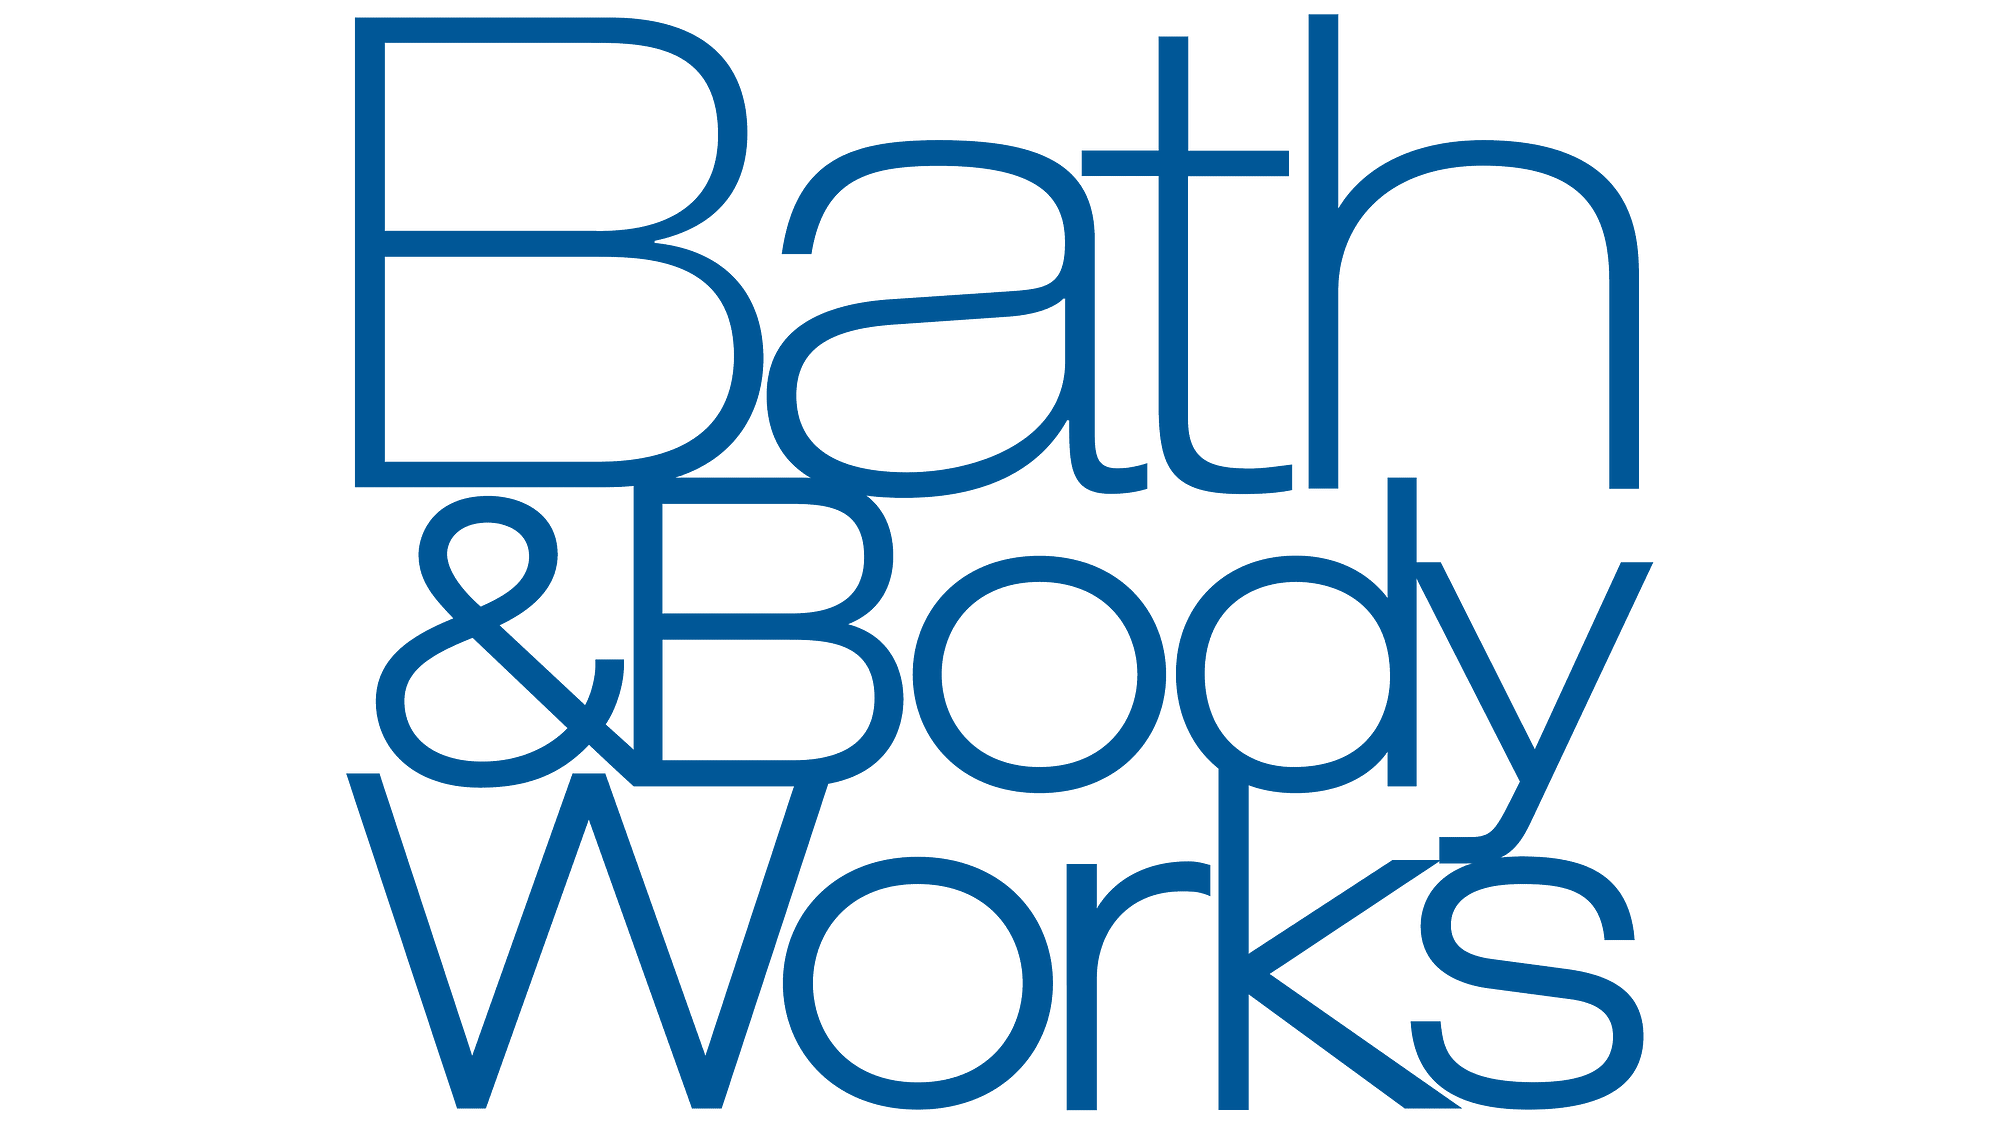 bath-and-body-works